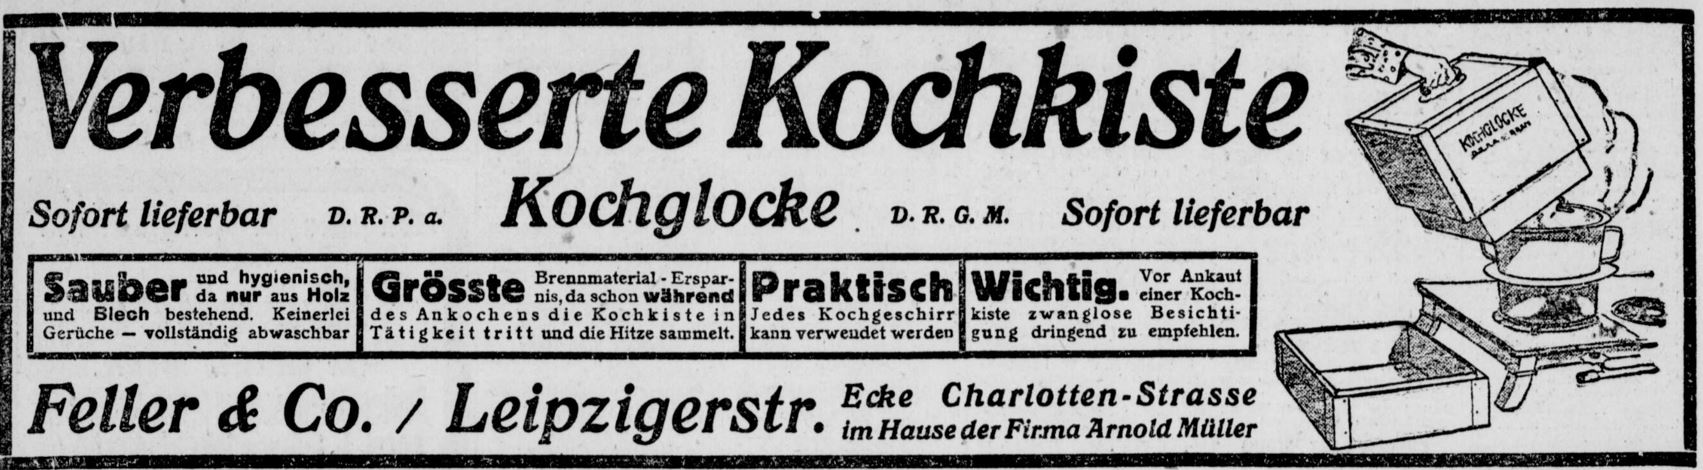 28_Berliner Volks-Zeitung_1917_10_23_Nr541_p4_Kochkiste_Kochglocke_Feller